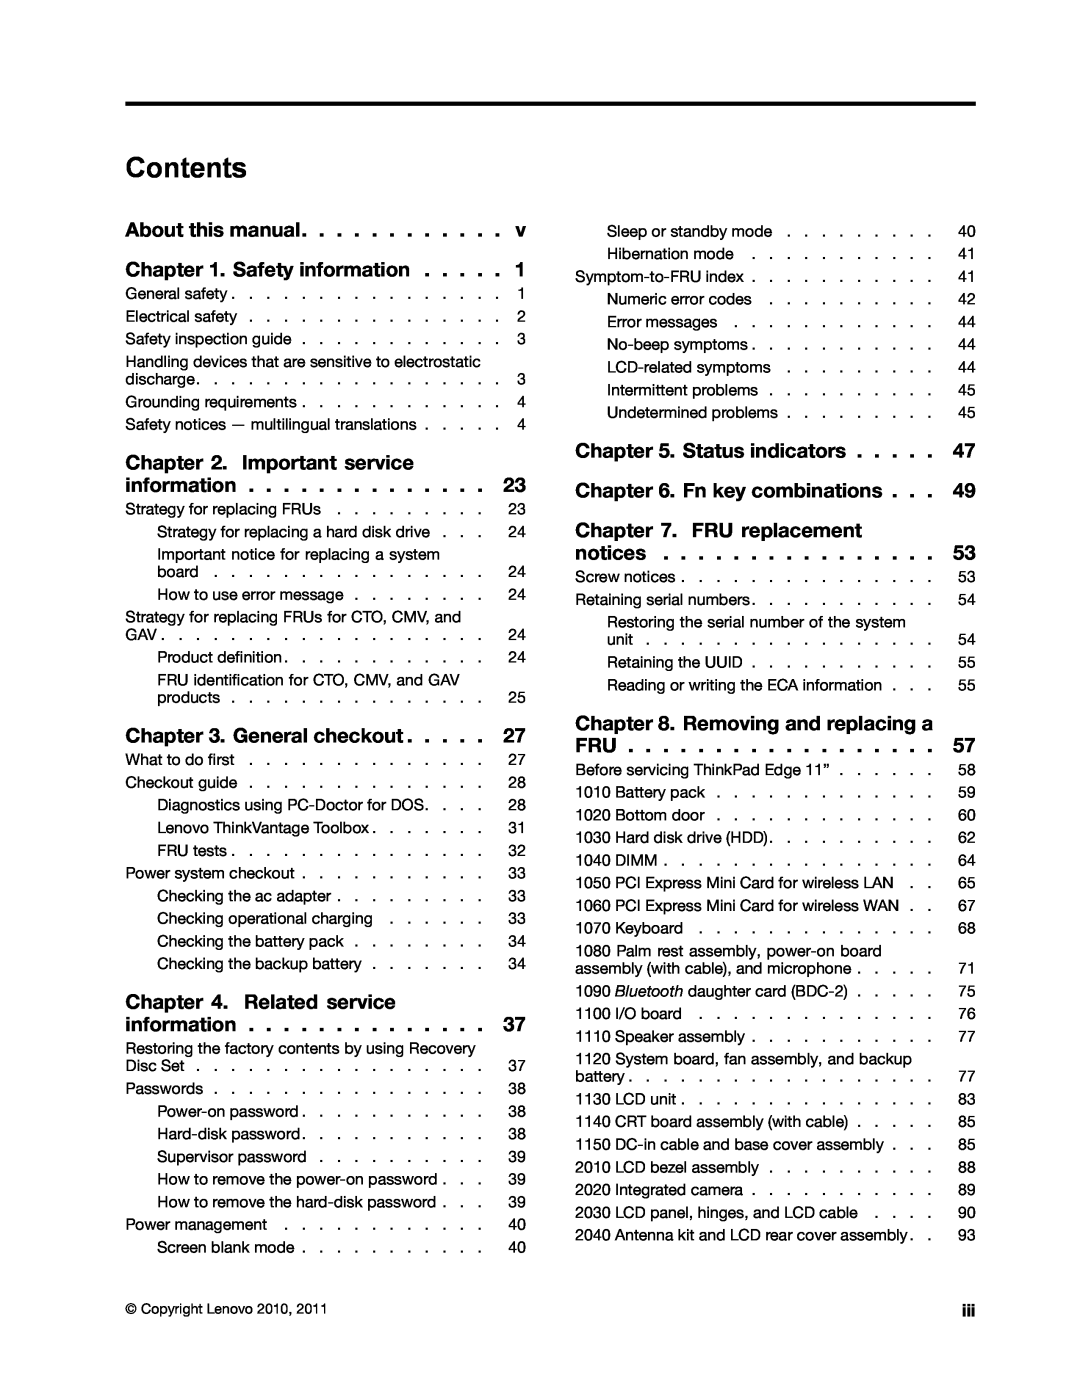 Lenovo E10 manual Contents 